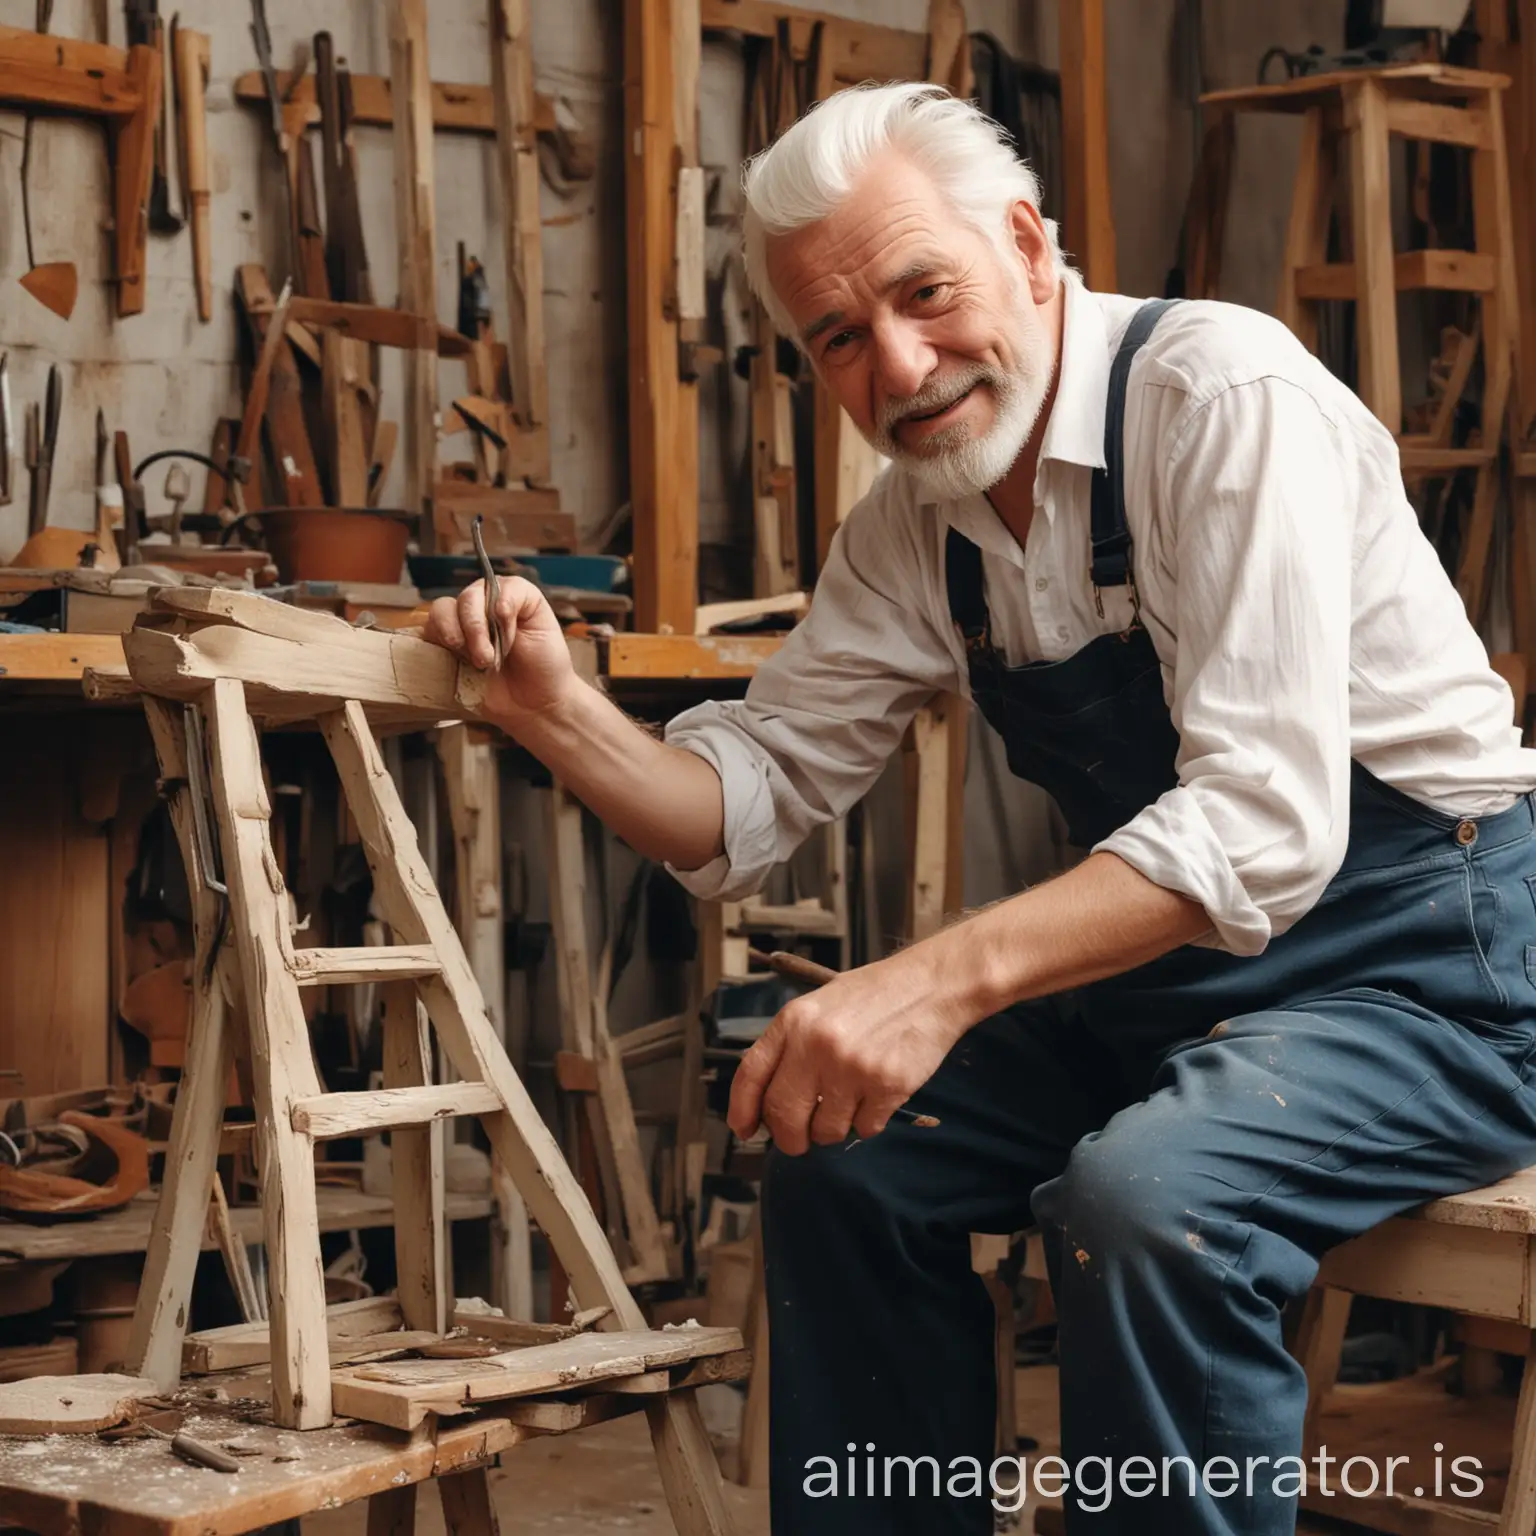 Elderly-Craftsman-Joyfully-Restores-Broken-Chair